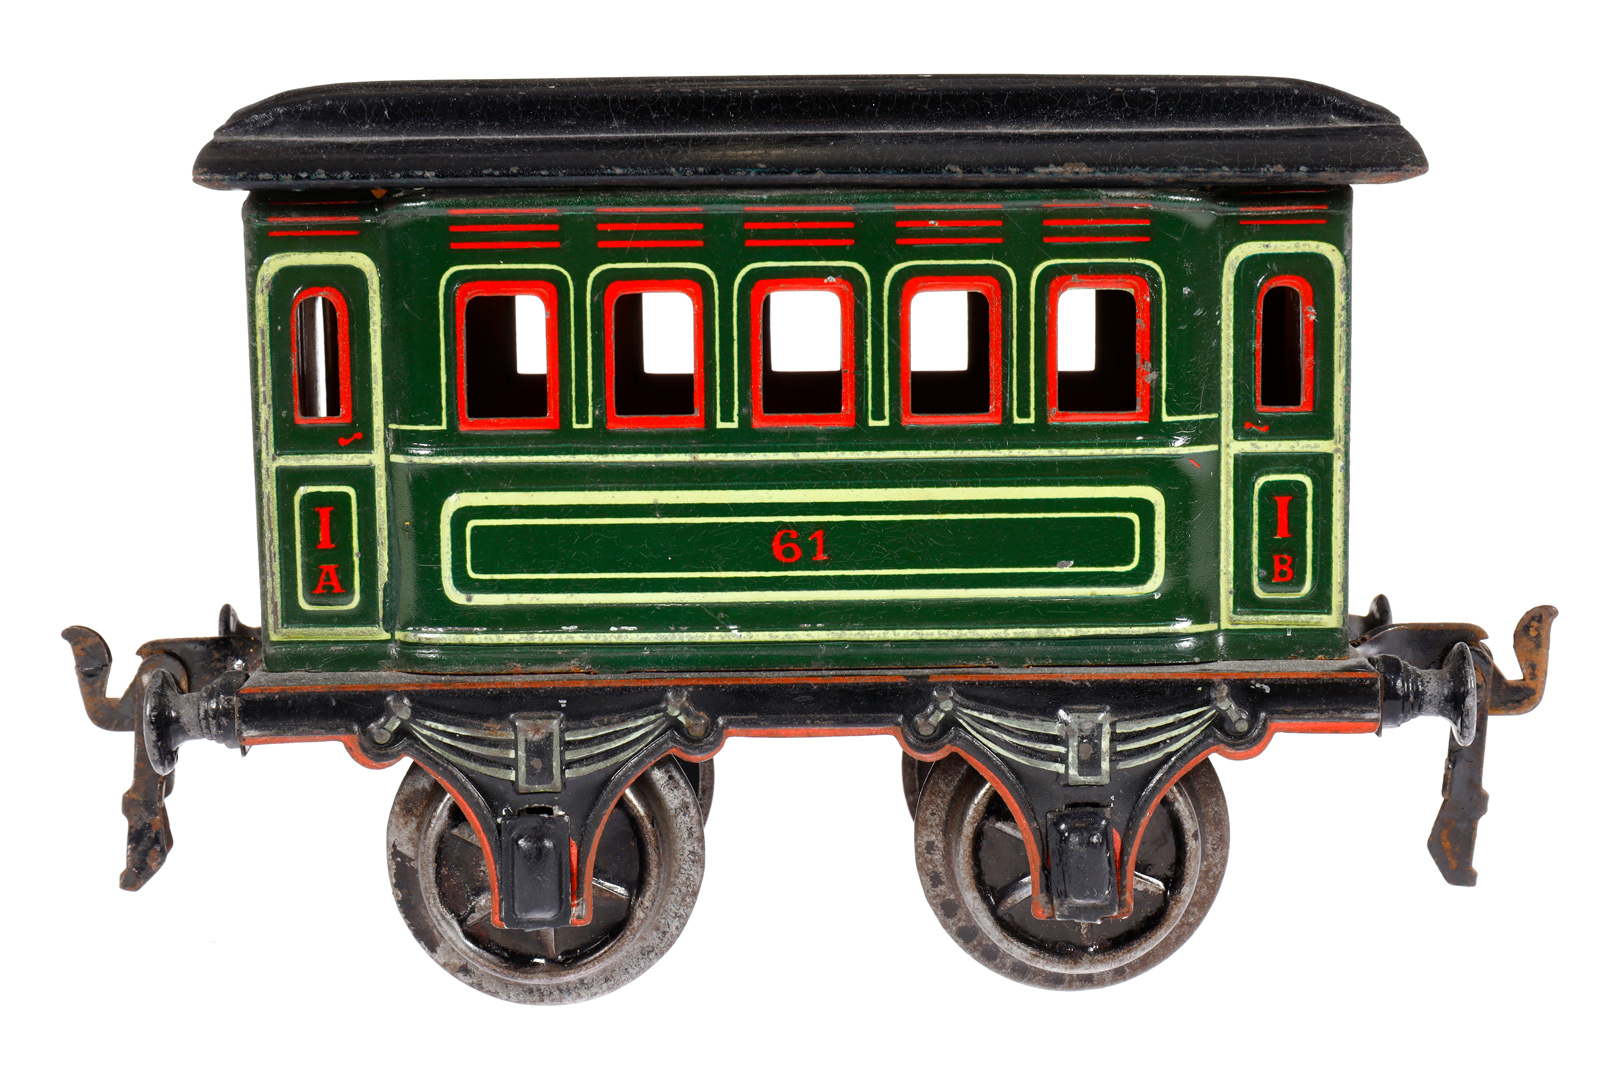 Märklin Personenwagen 1861, Spur 1, uralt, grün, CL, LS und gealterter Lack, L 15, Z 2-3